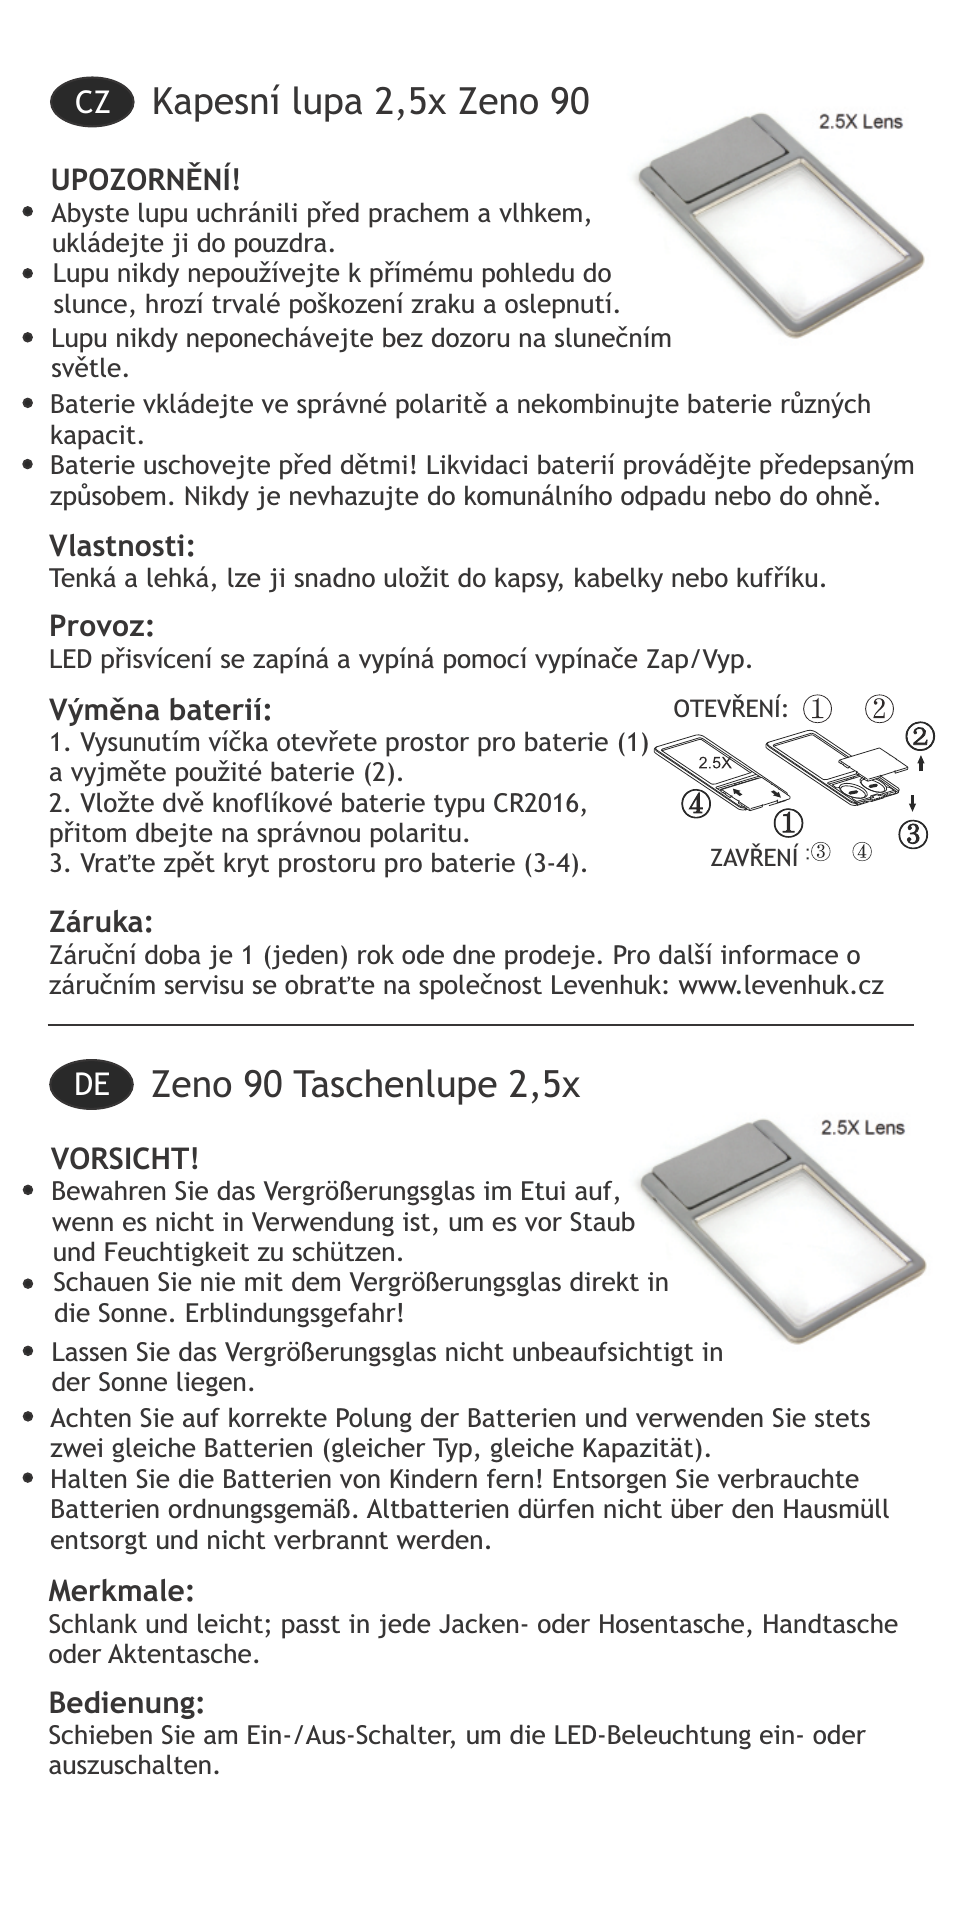 Zeno 90 Fresnel Lens, 2.5x, 48/45 mm